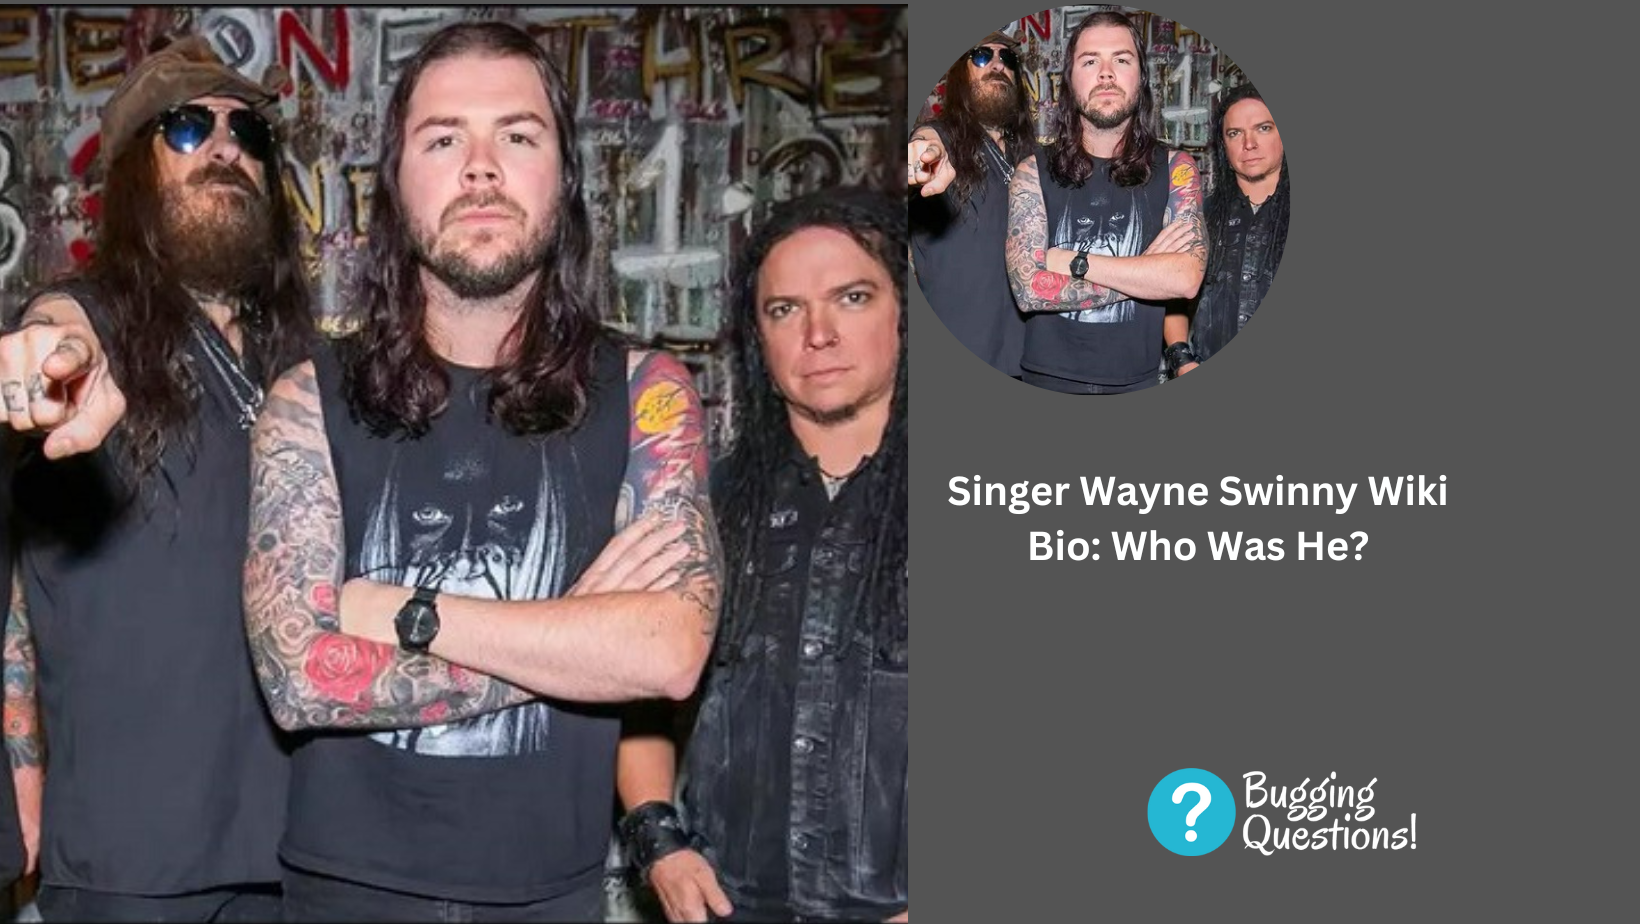 Singer Wayne Swinny Wiki Bio: Who Was He?